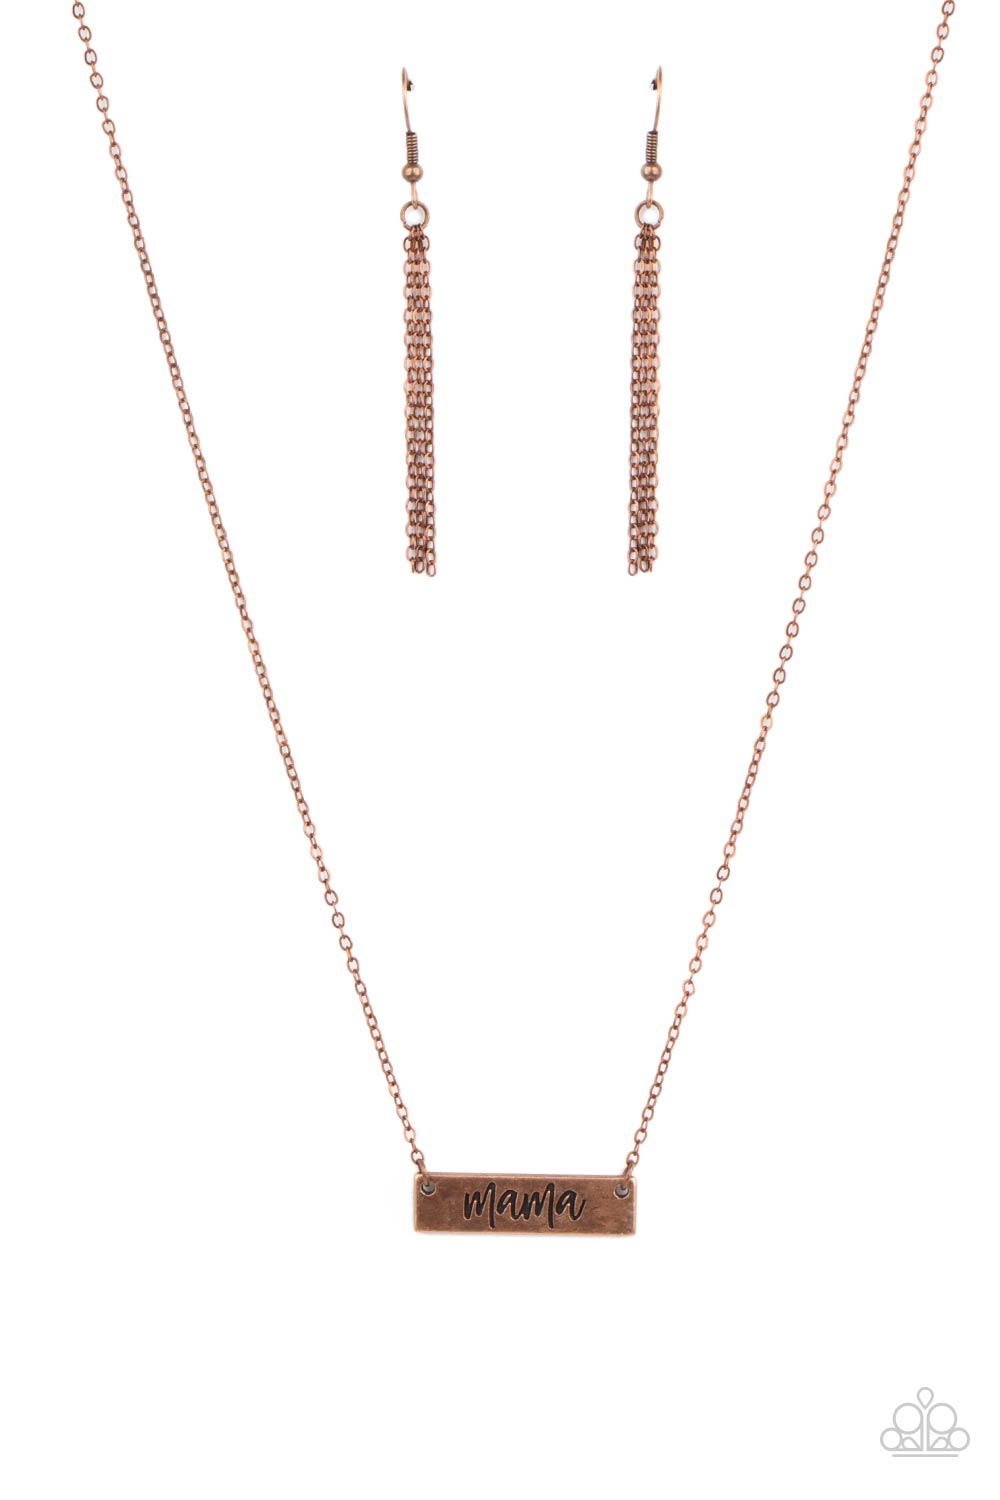 Blessed Mama - Copper necklace C022C